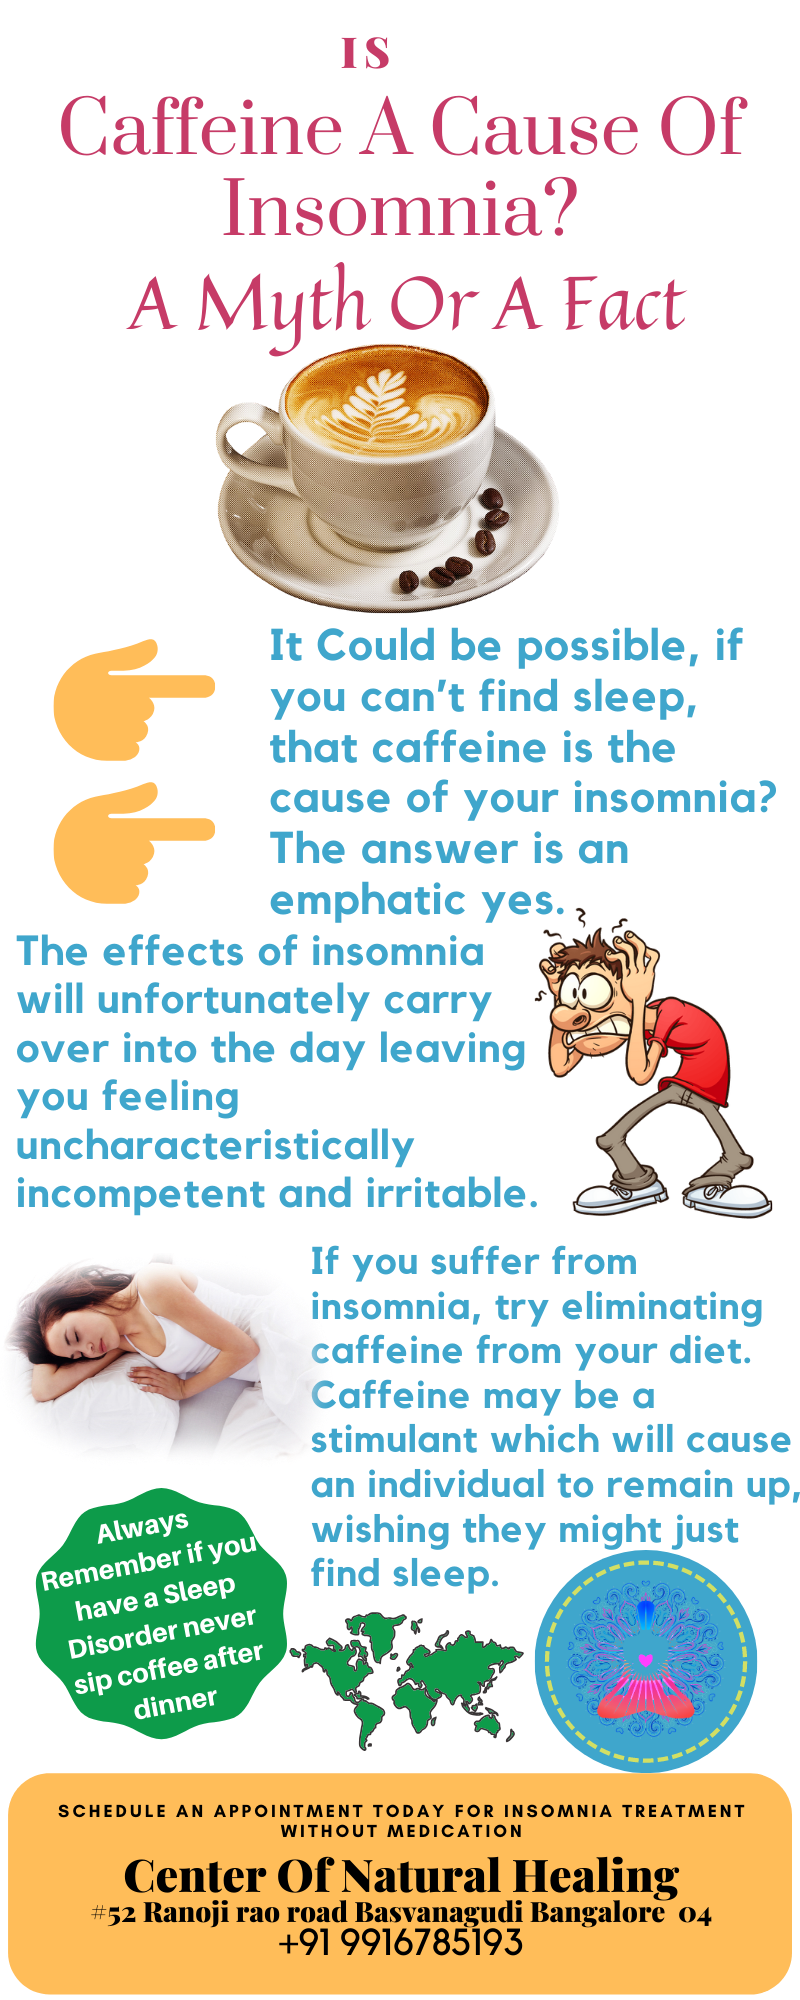 Caffeine-A-Cause-Of-Insomnia